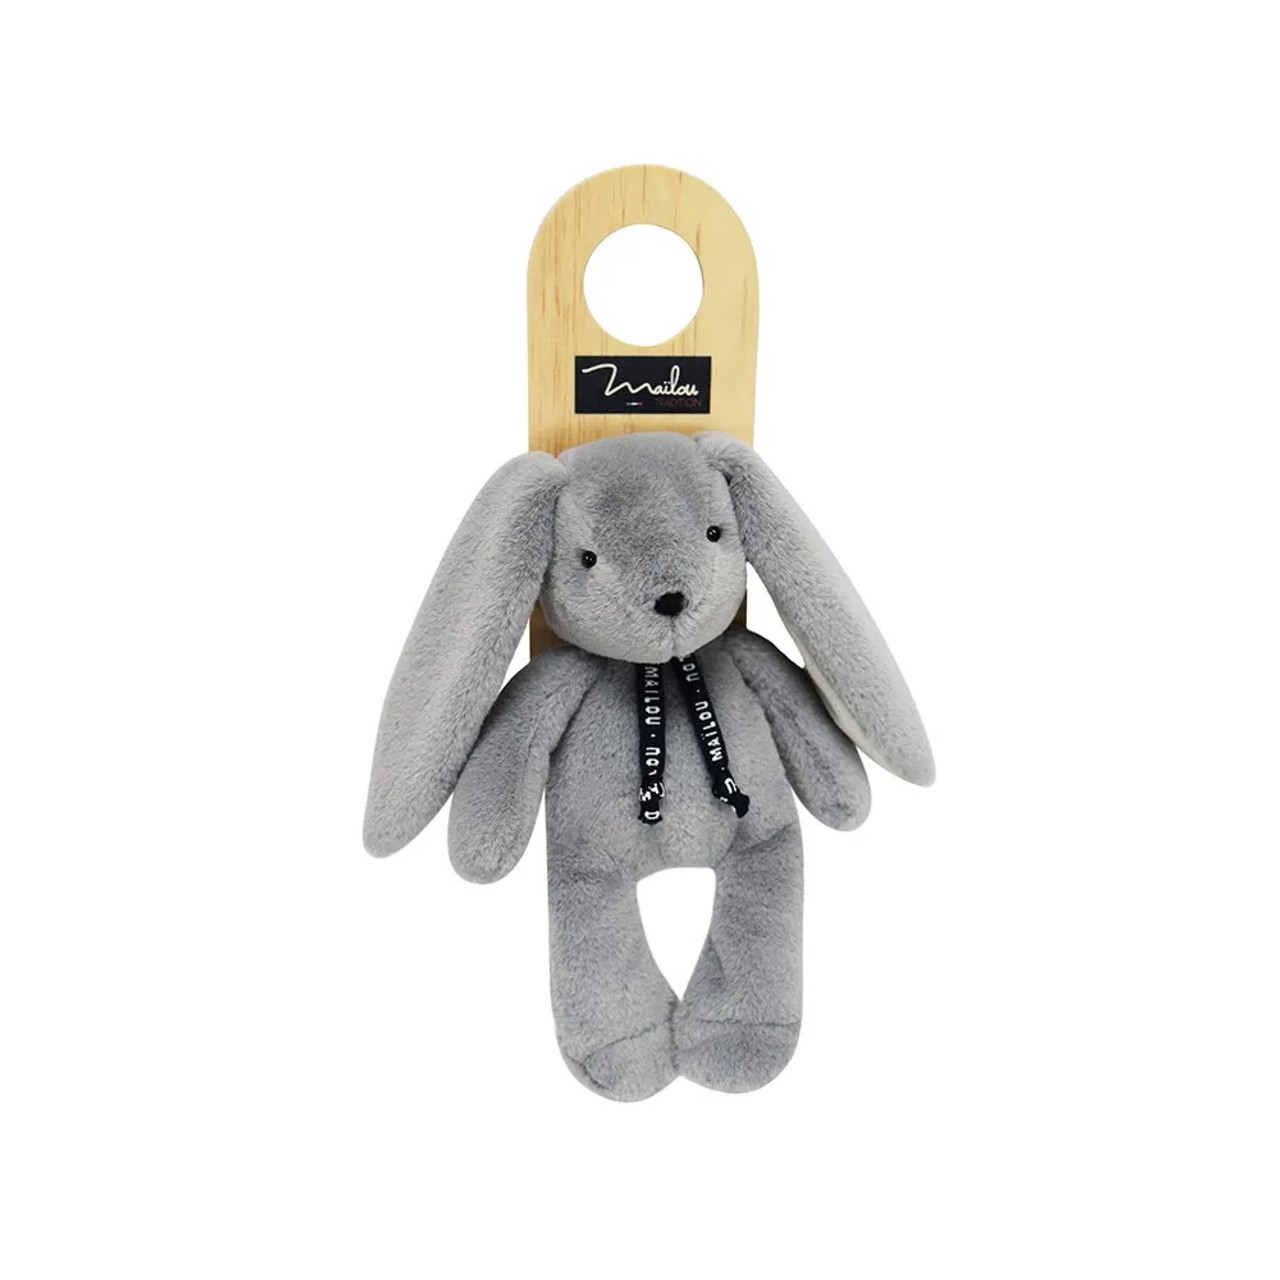 Little Rabbit Plush Toy 23cm, Grey Dorlotin, Mailou Tradition France